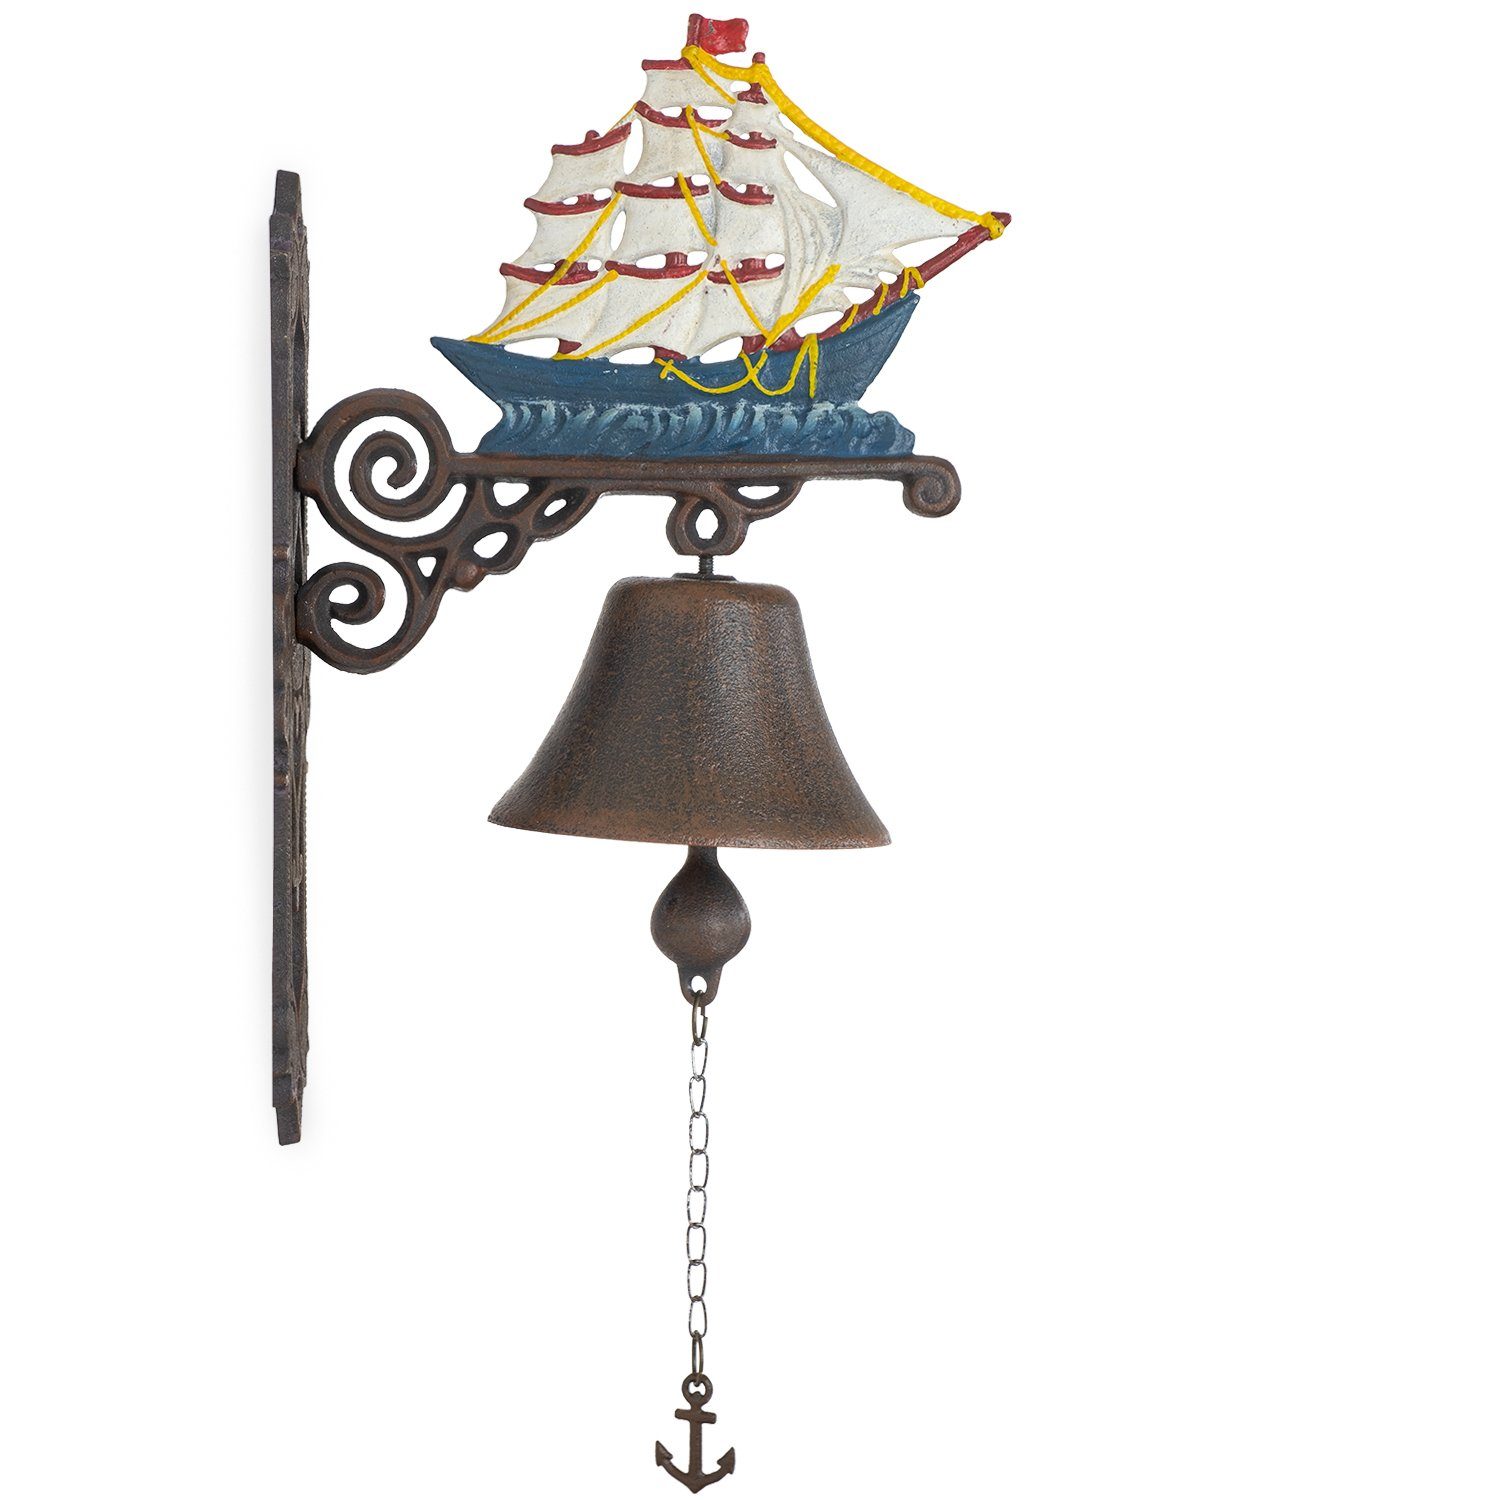 Moritz Gartenfigur Glocke Schiff Segelboot, Gong Wandglocke (Wandglocke), Klingel Gusseisen Glocke Türglocke Antik Landhaus